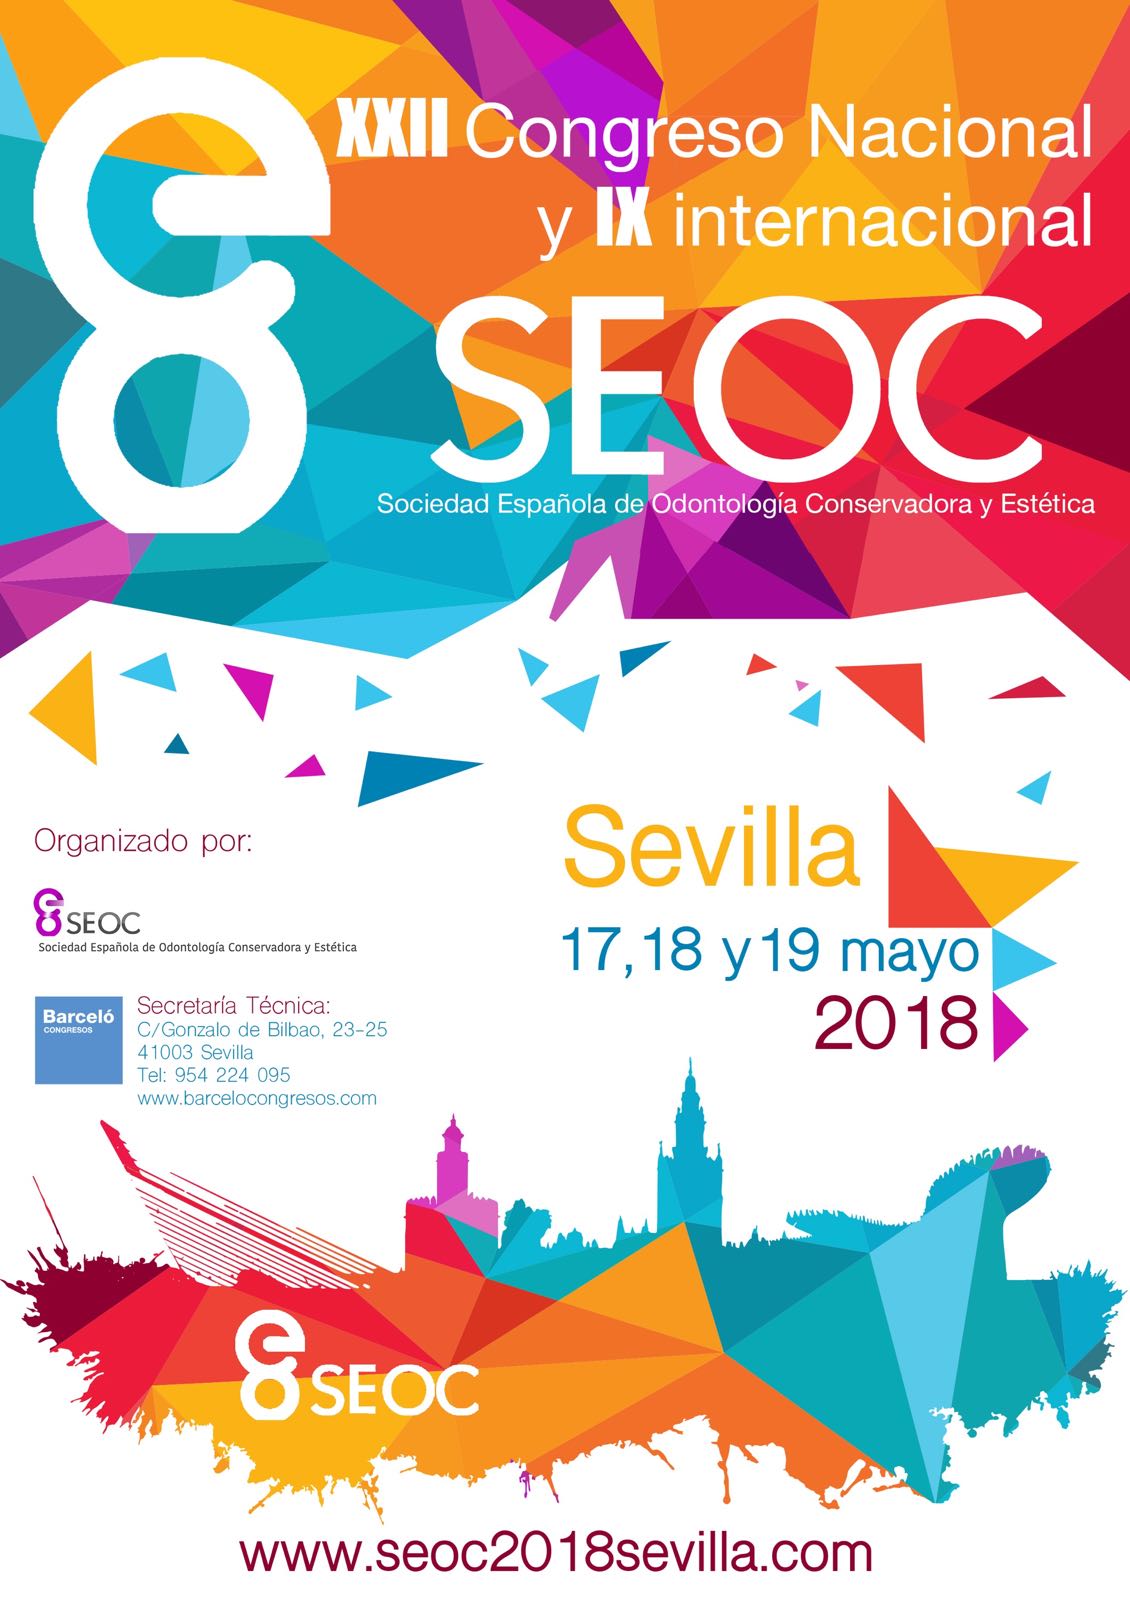 SEOC Sevilla 2018